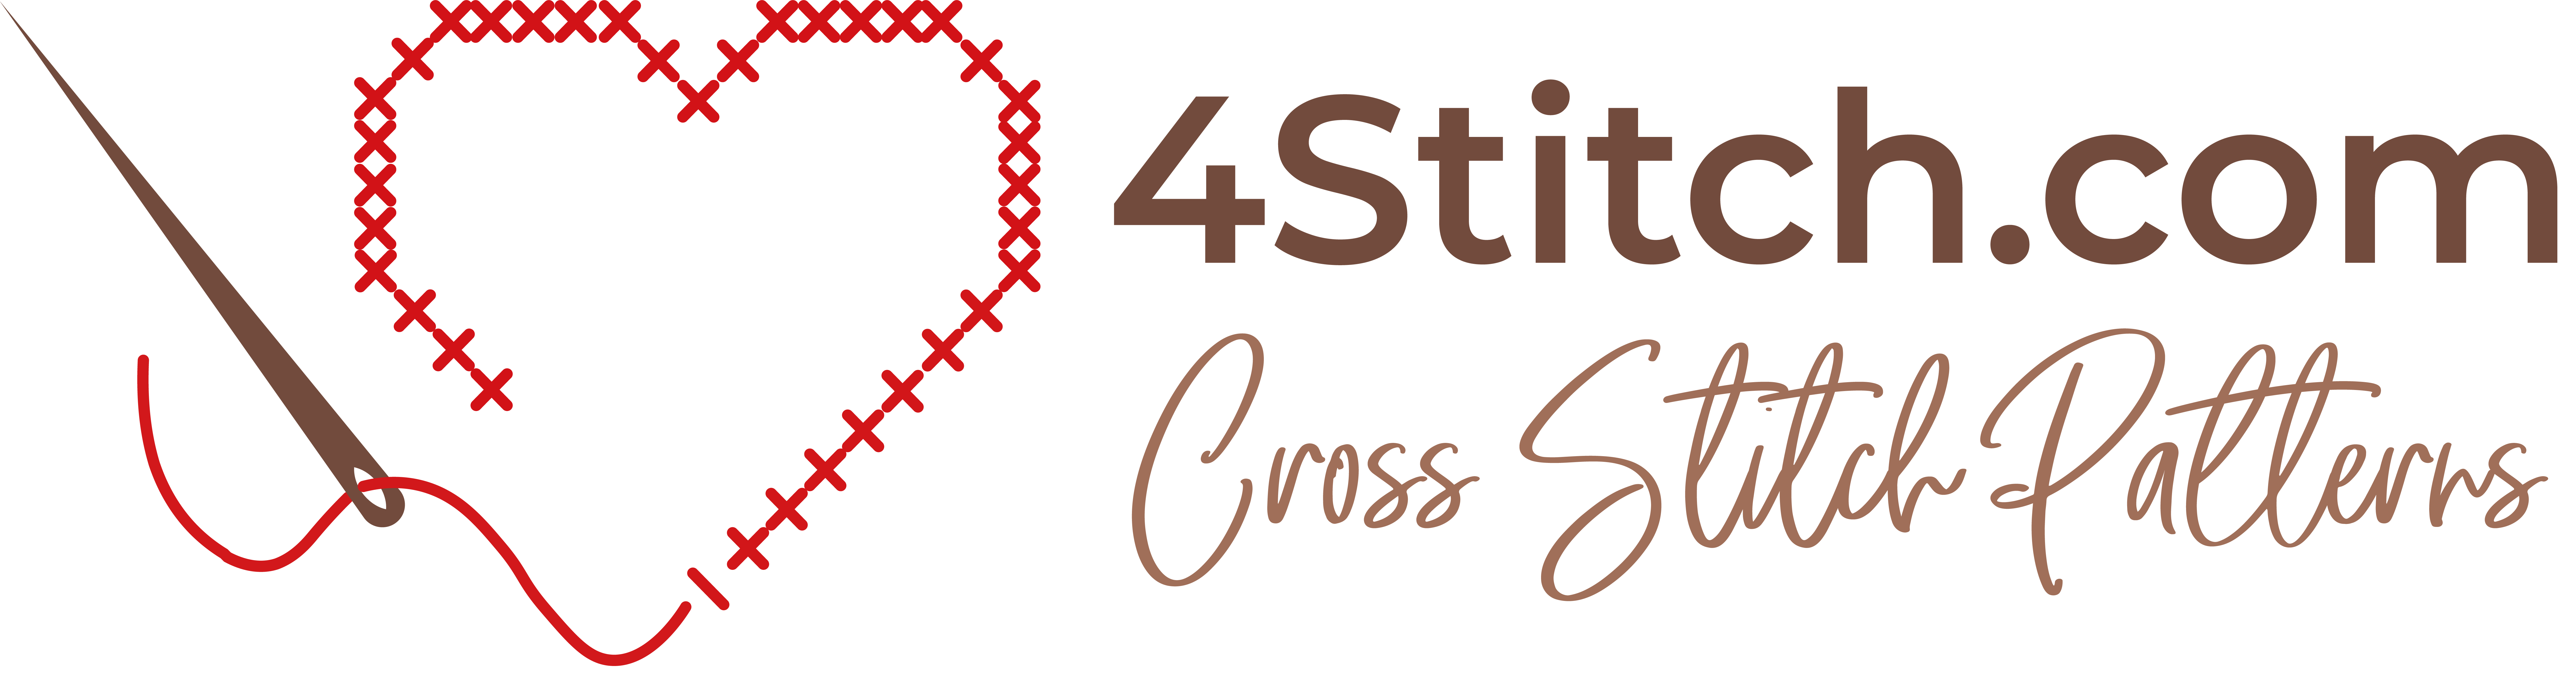 4stitch.com – Cross Stitch Patterns